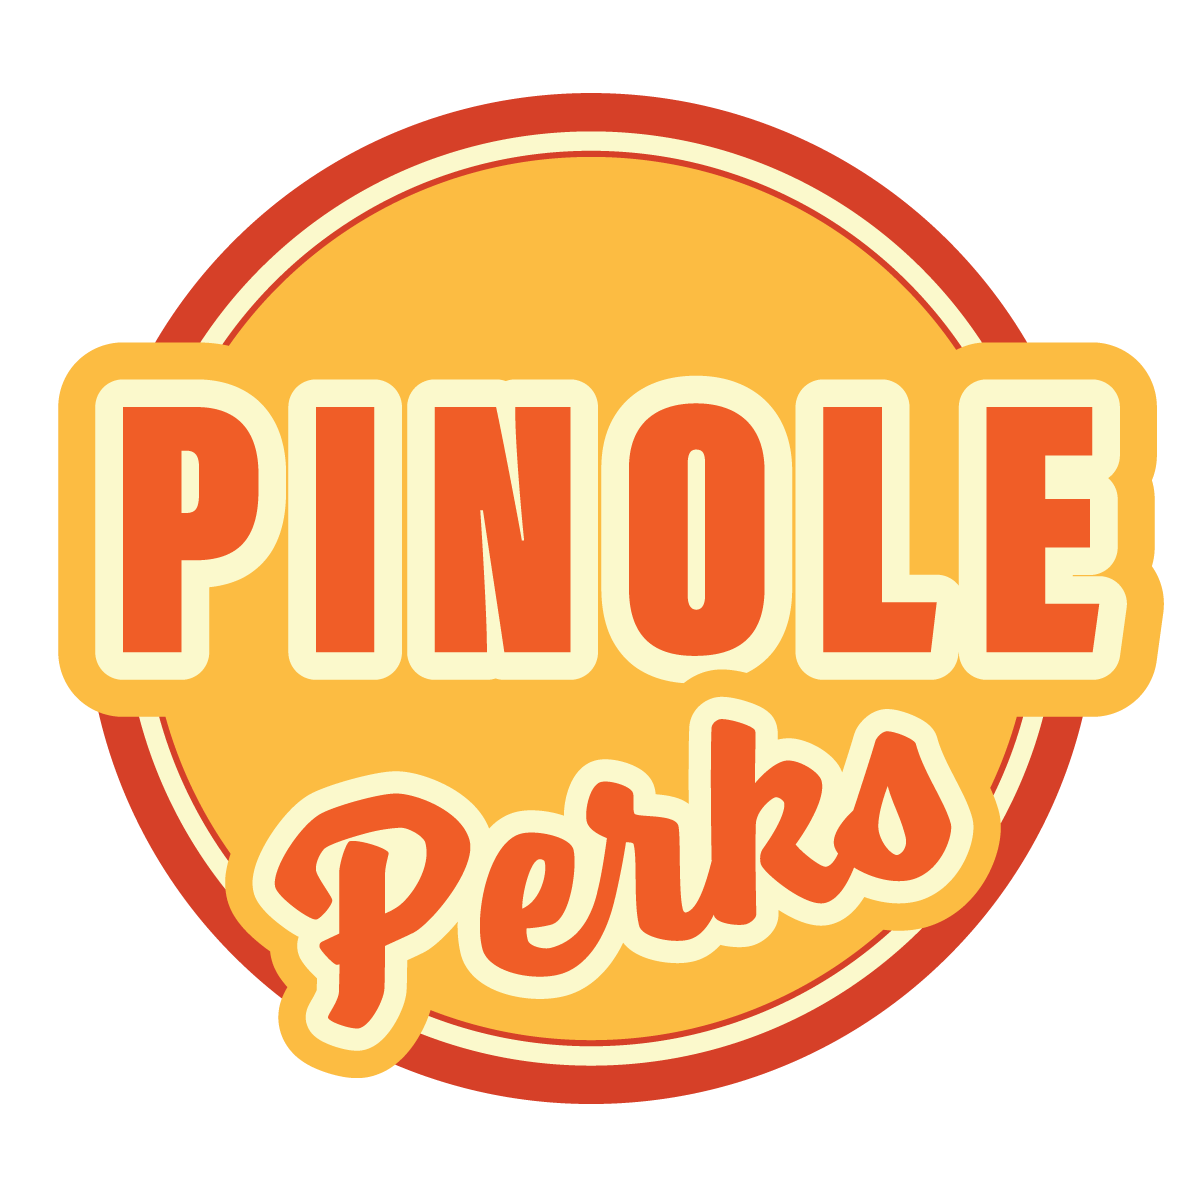 City of Pinole, CA logo